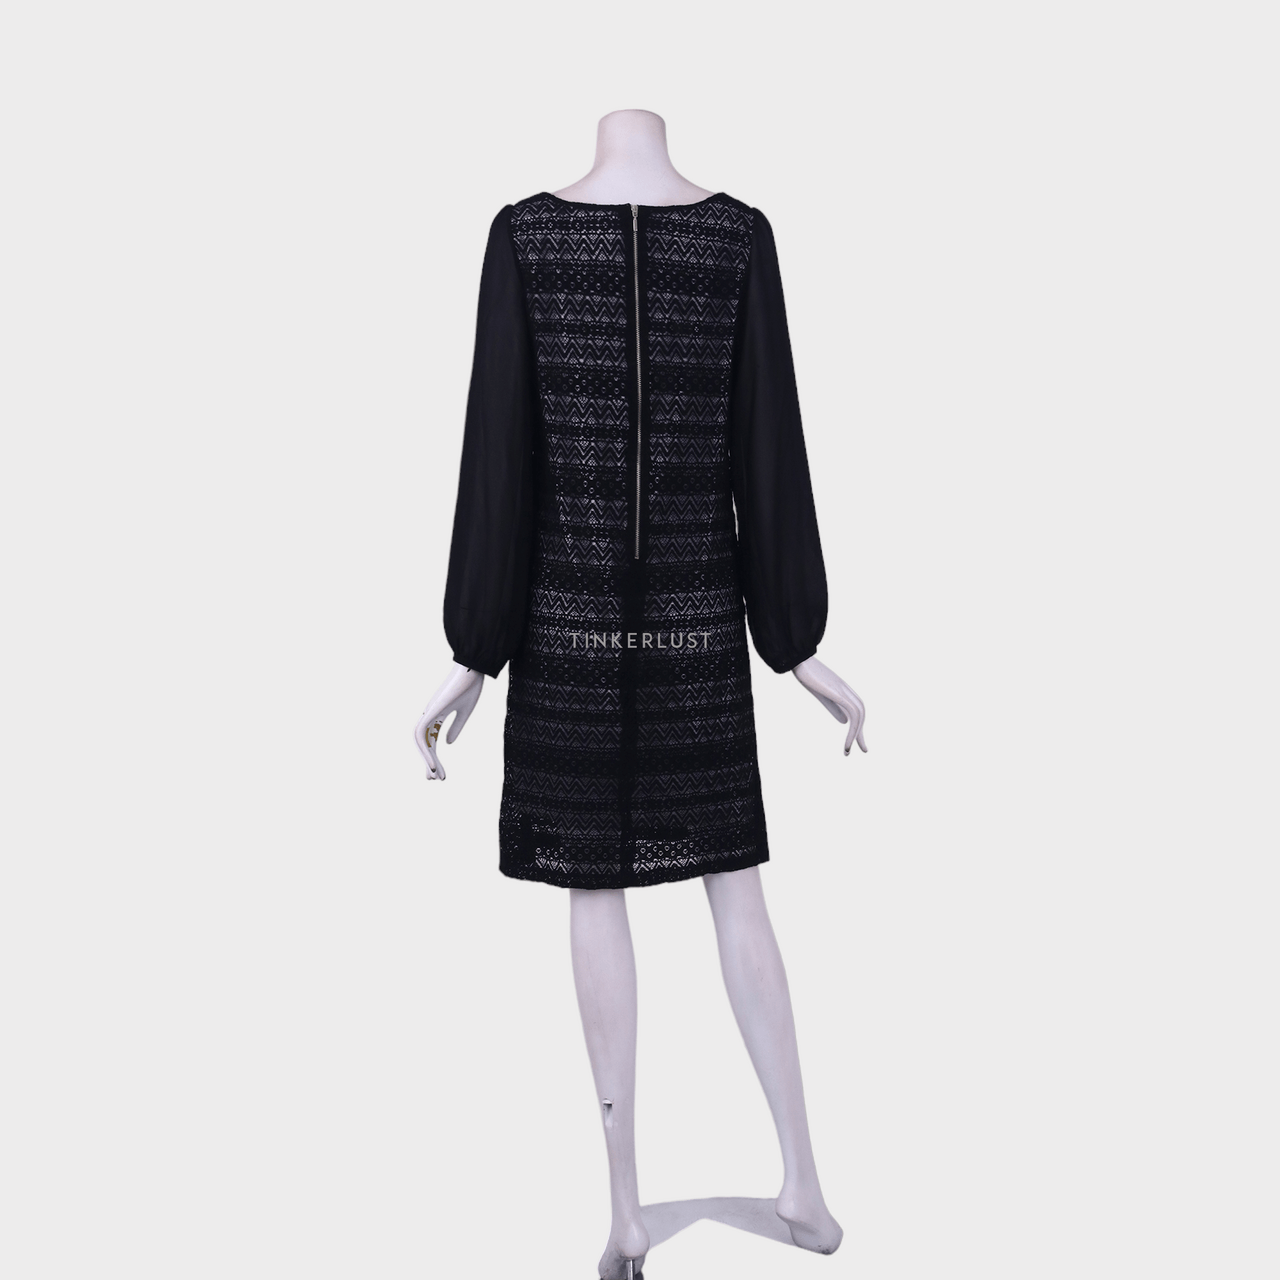 Promod Black Lace Midi Dress